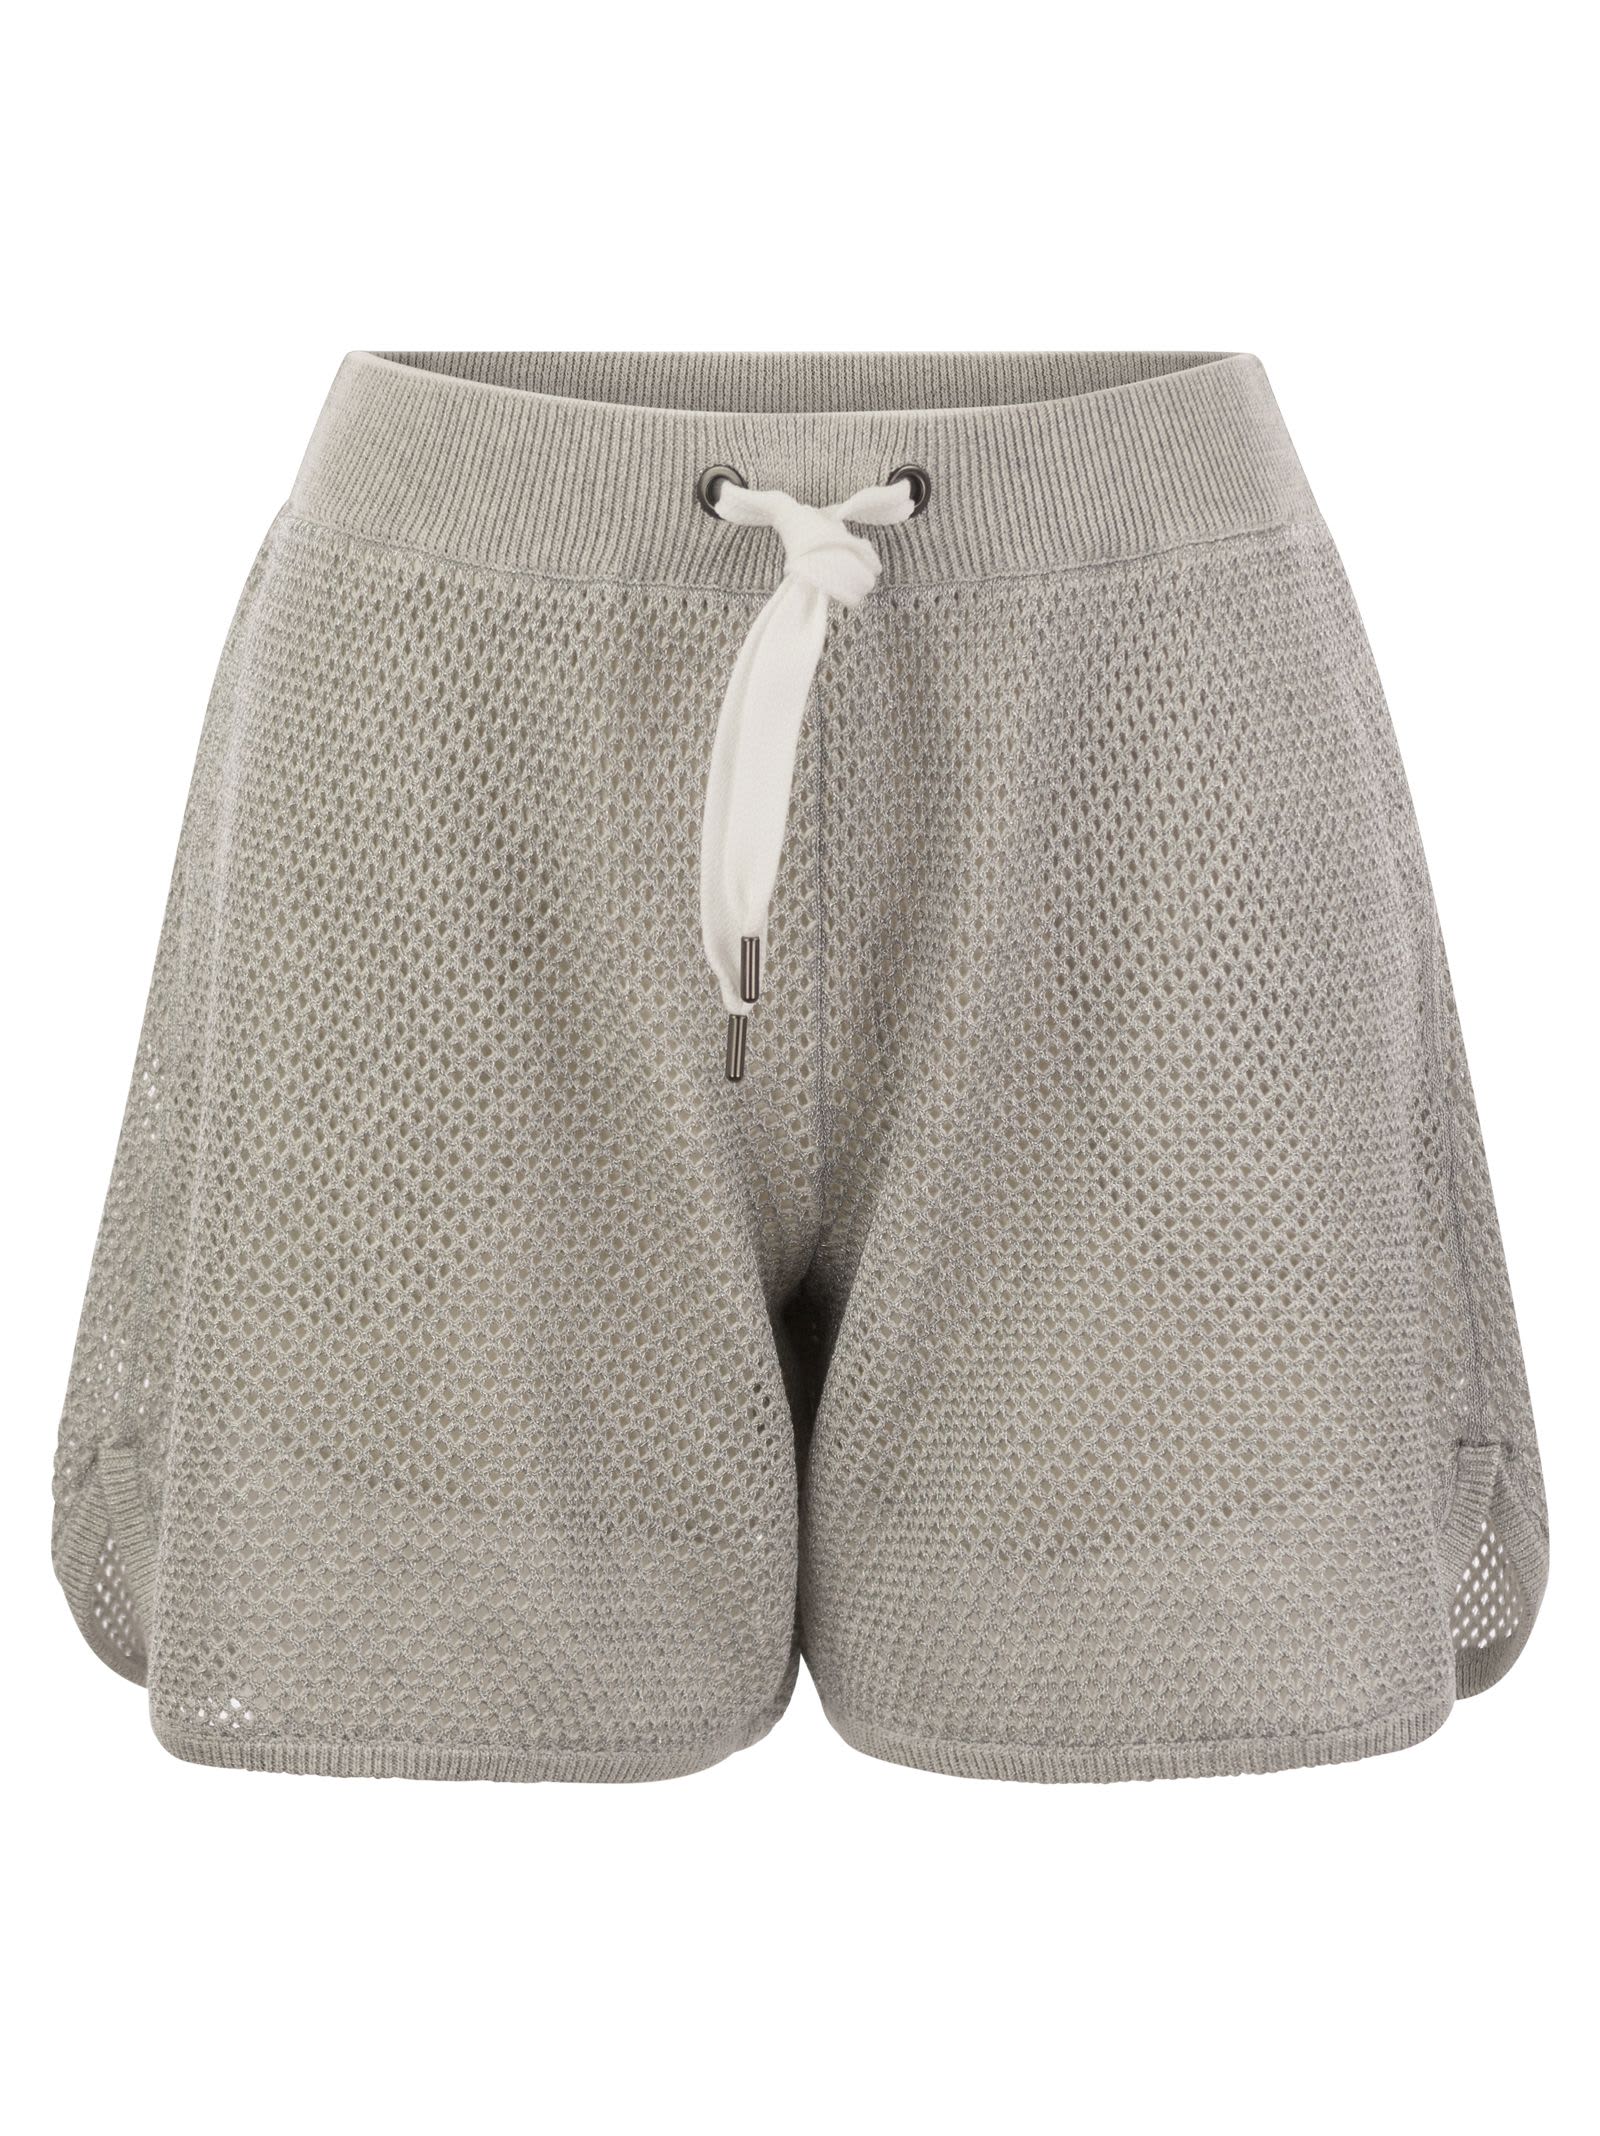 Sparkling Net Knit Cotton Shorts